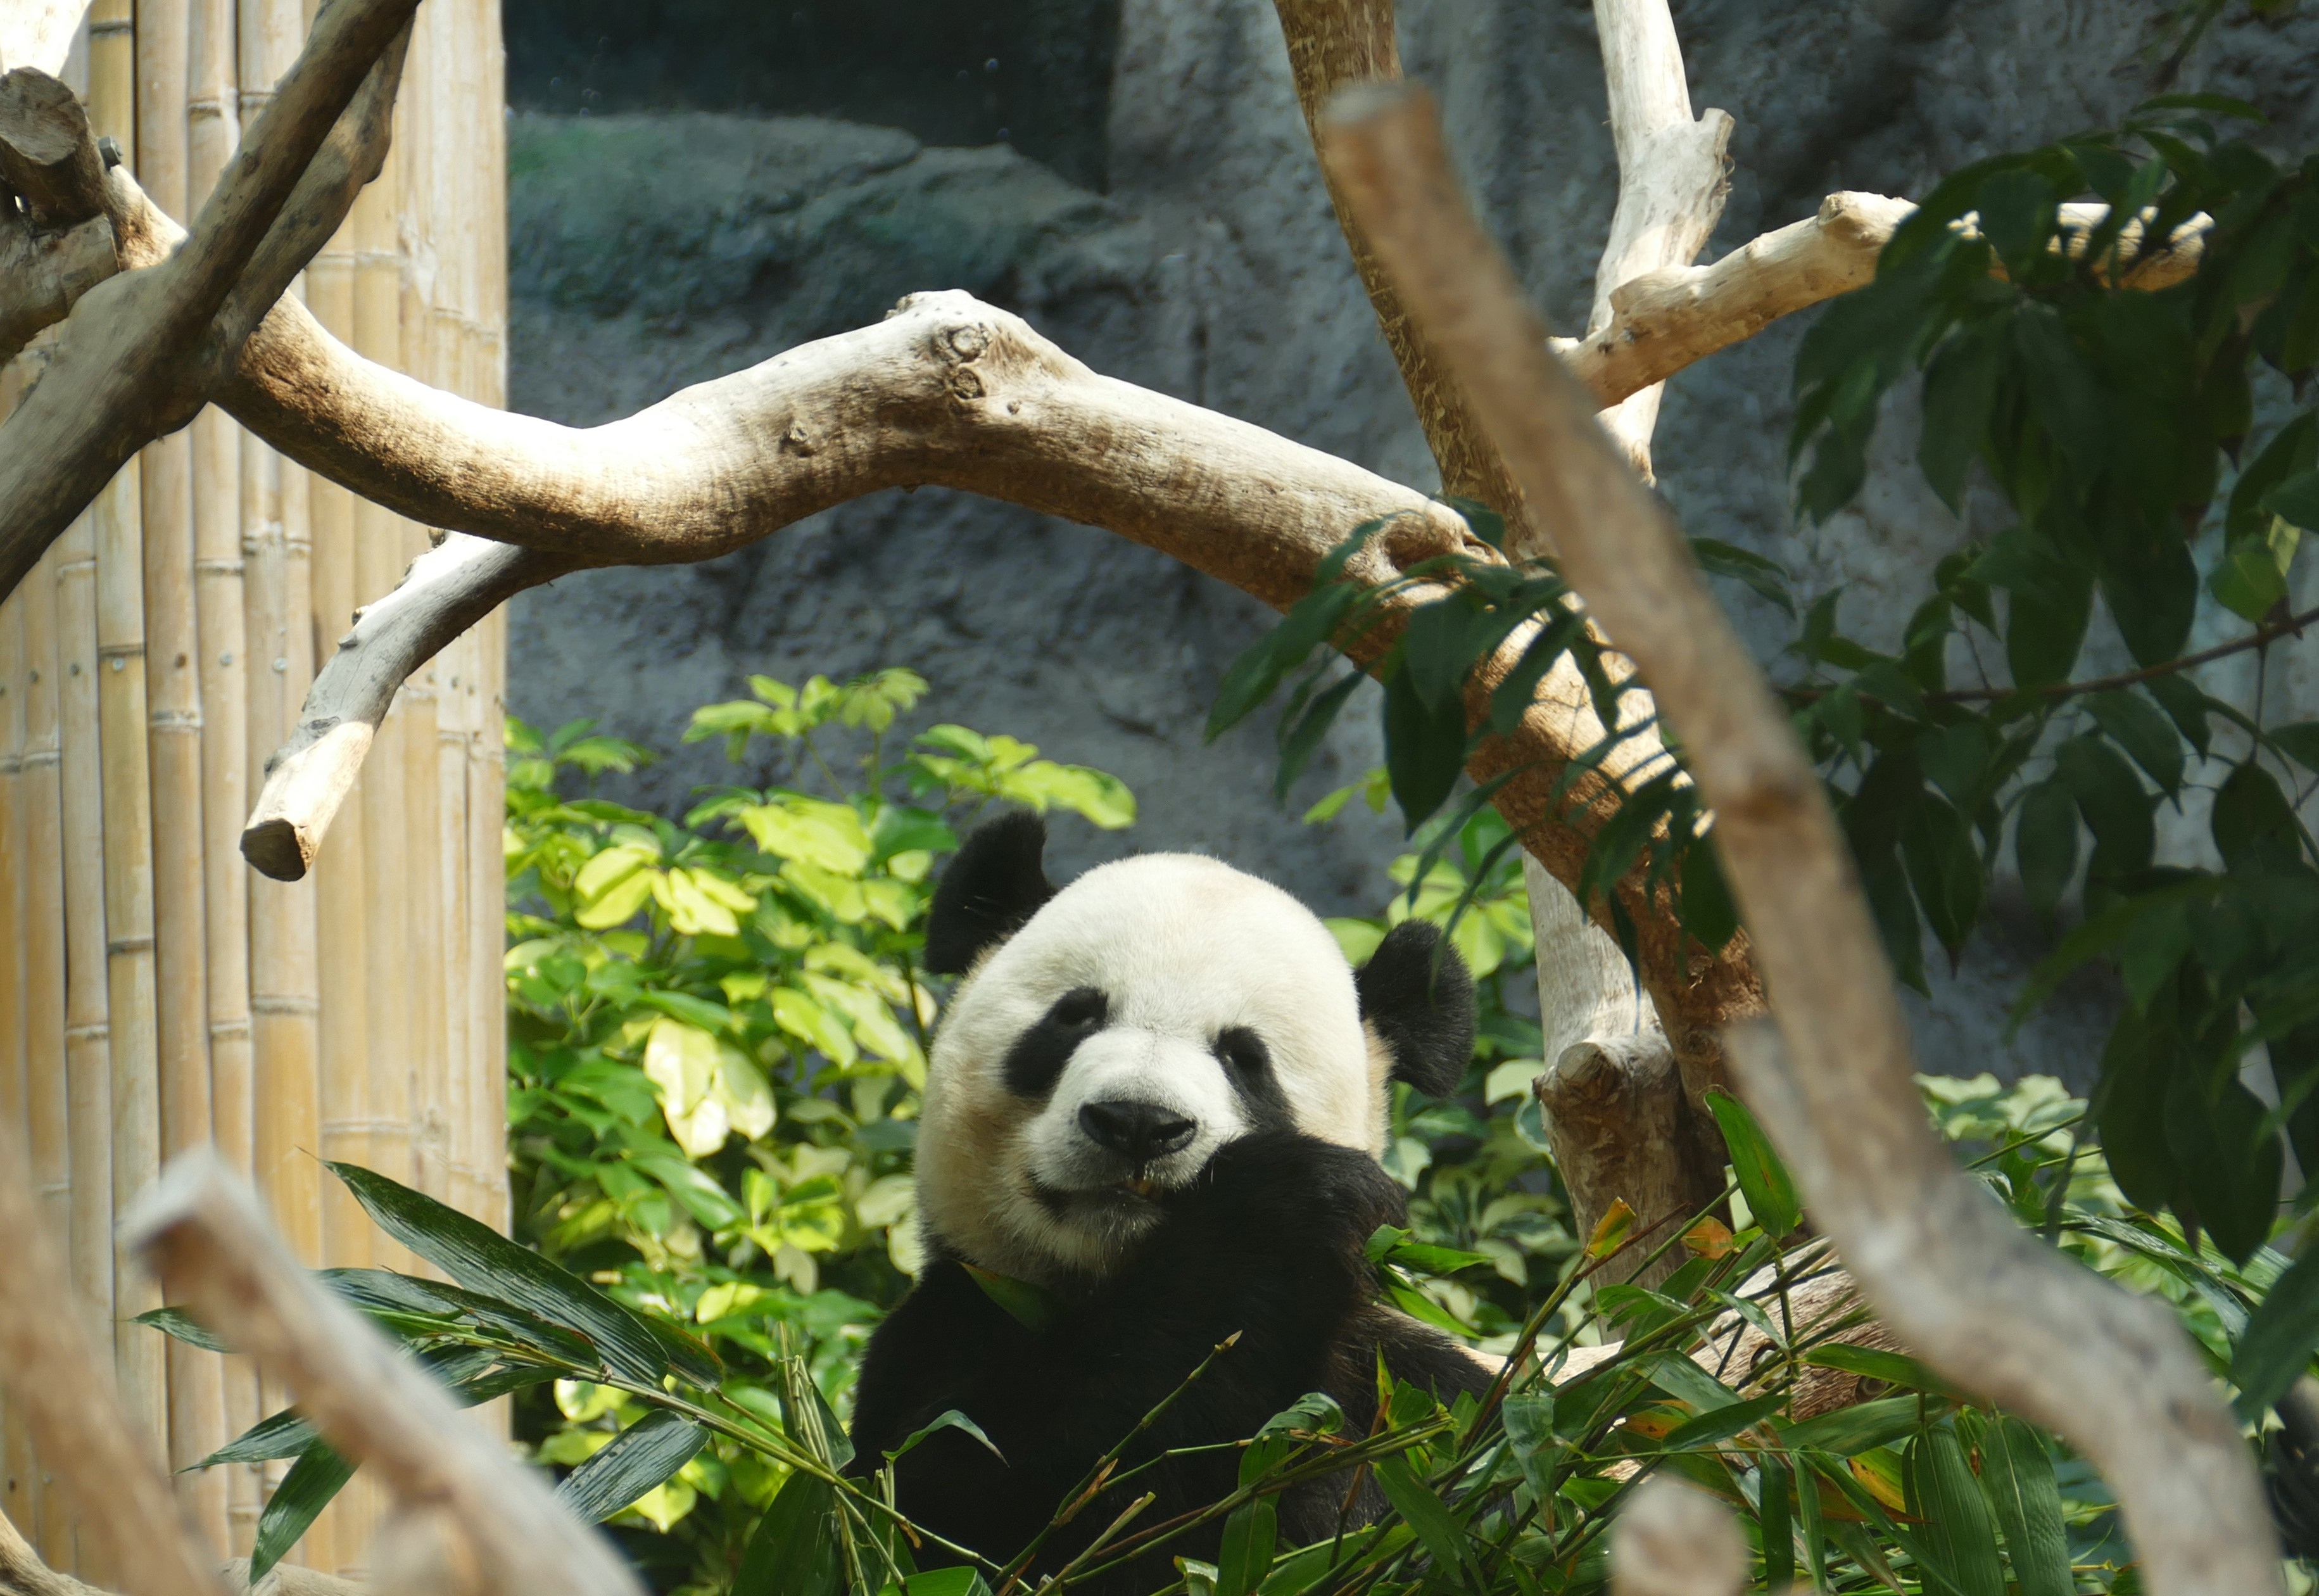 112017 descargar imagen árbol, animales, madera, bambú, panda: fondos de pantalla y protectores de pantalla gratis